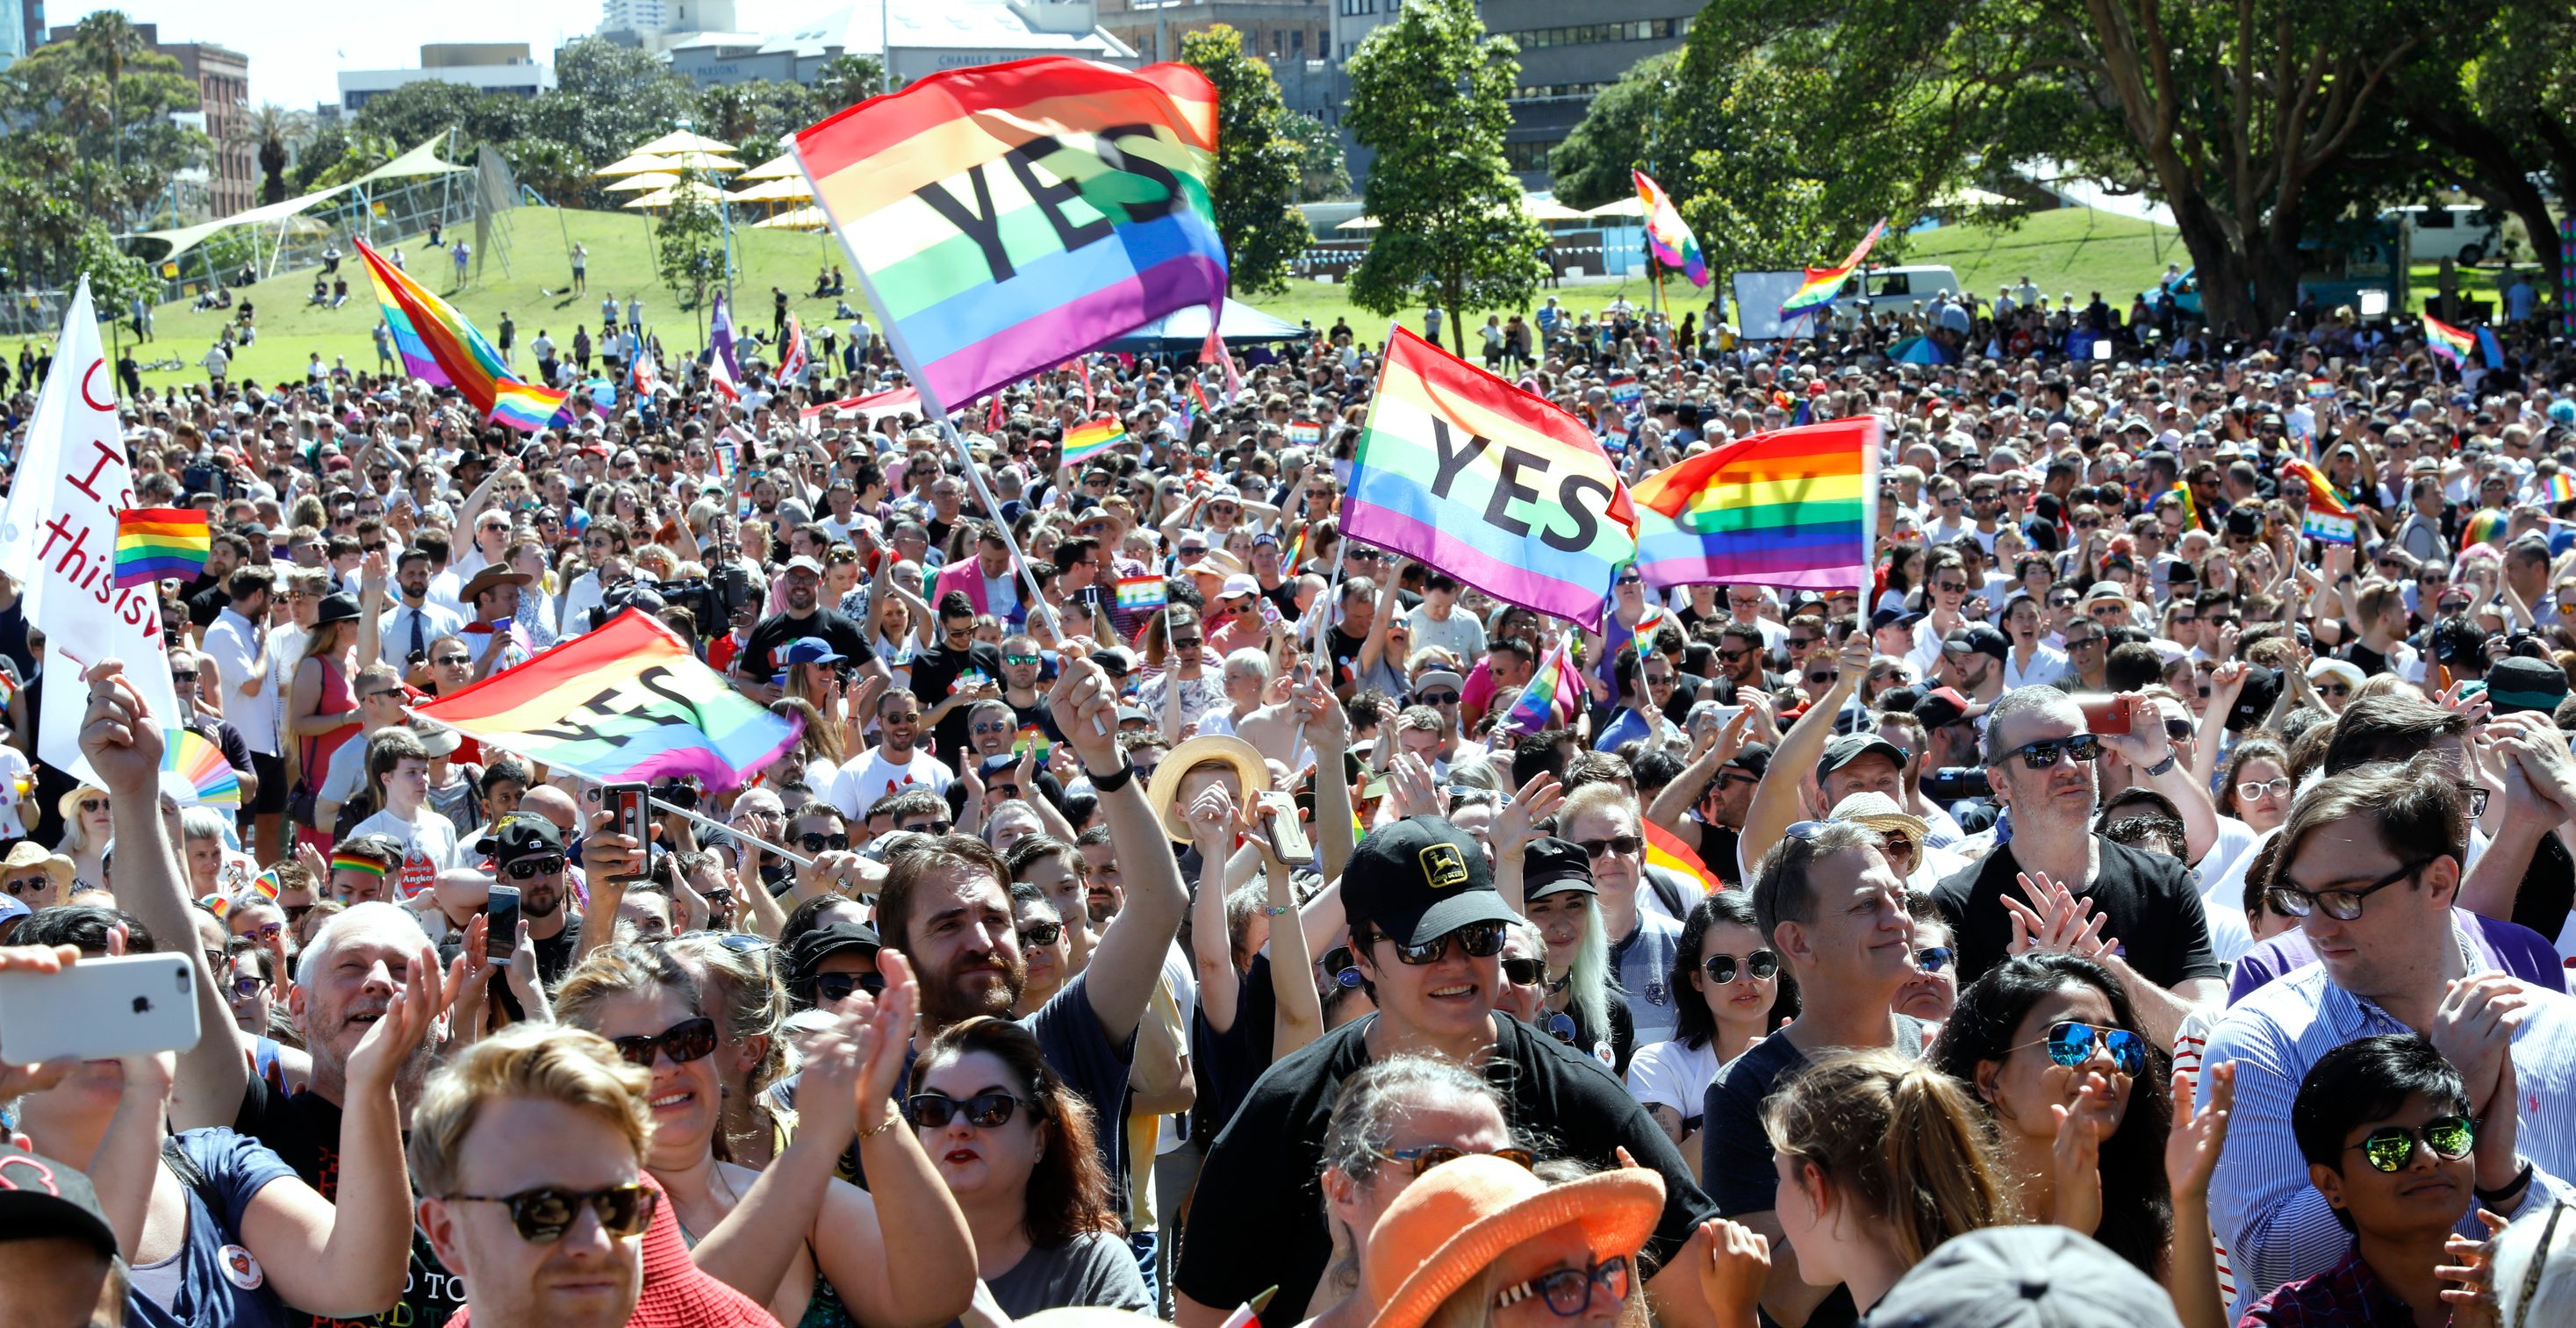 More August rallies around Australia to protest religious discrimination